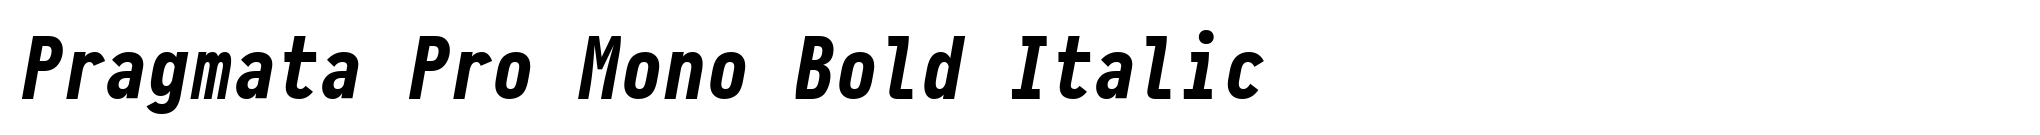 Pragmata Pro Mono Bold Italic image